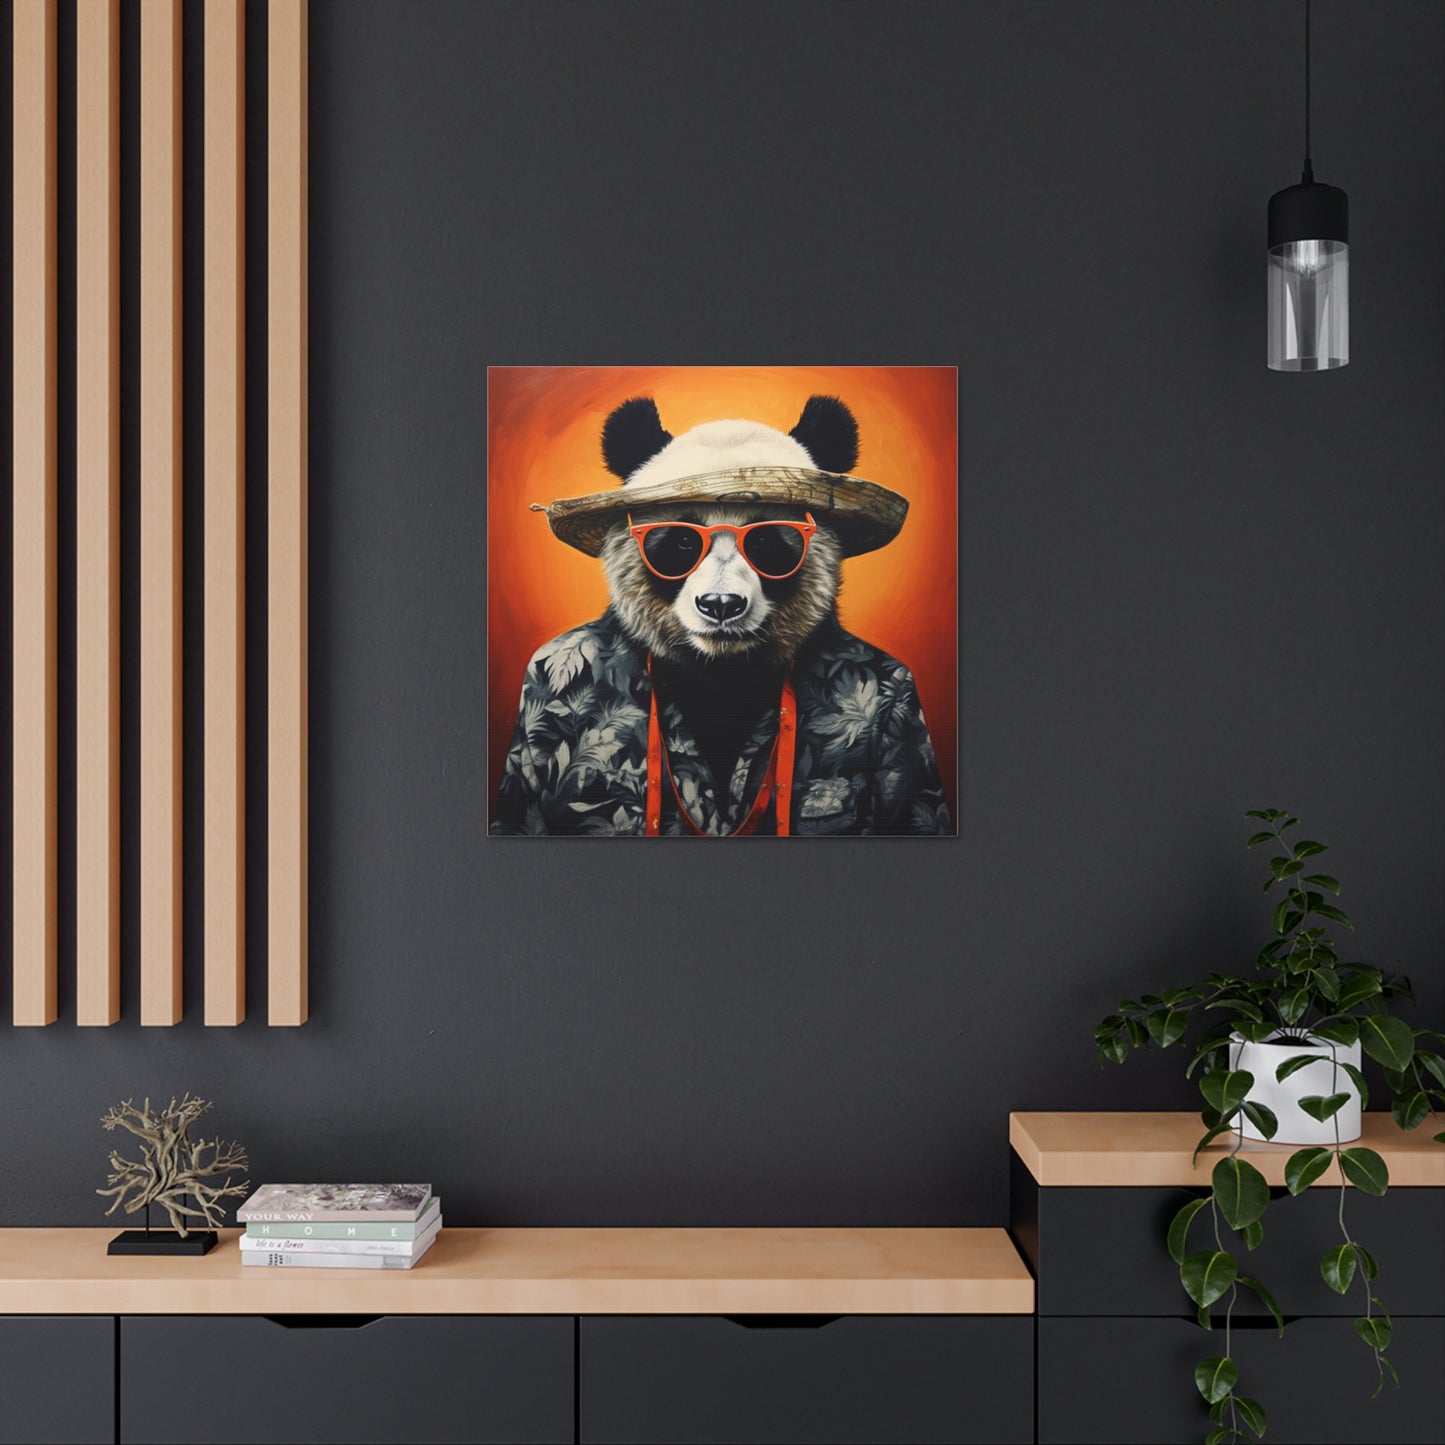 Panda Print with Panda Wearing Sunglasses